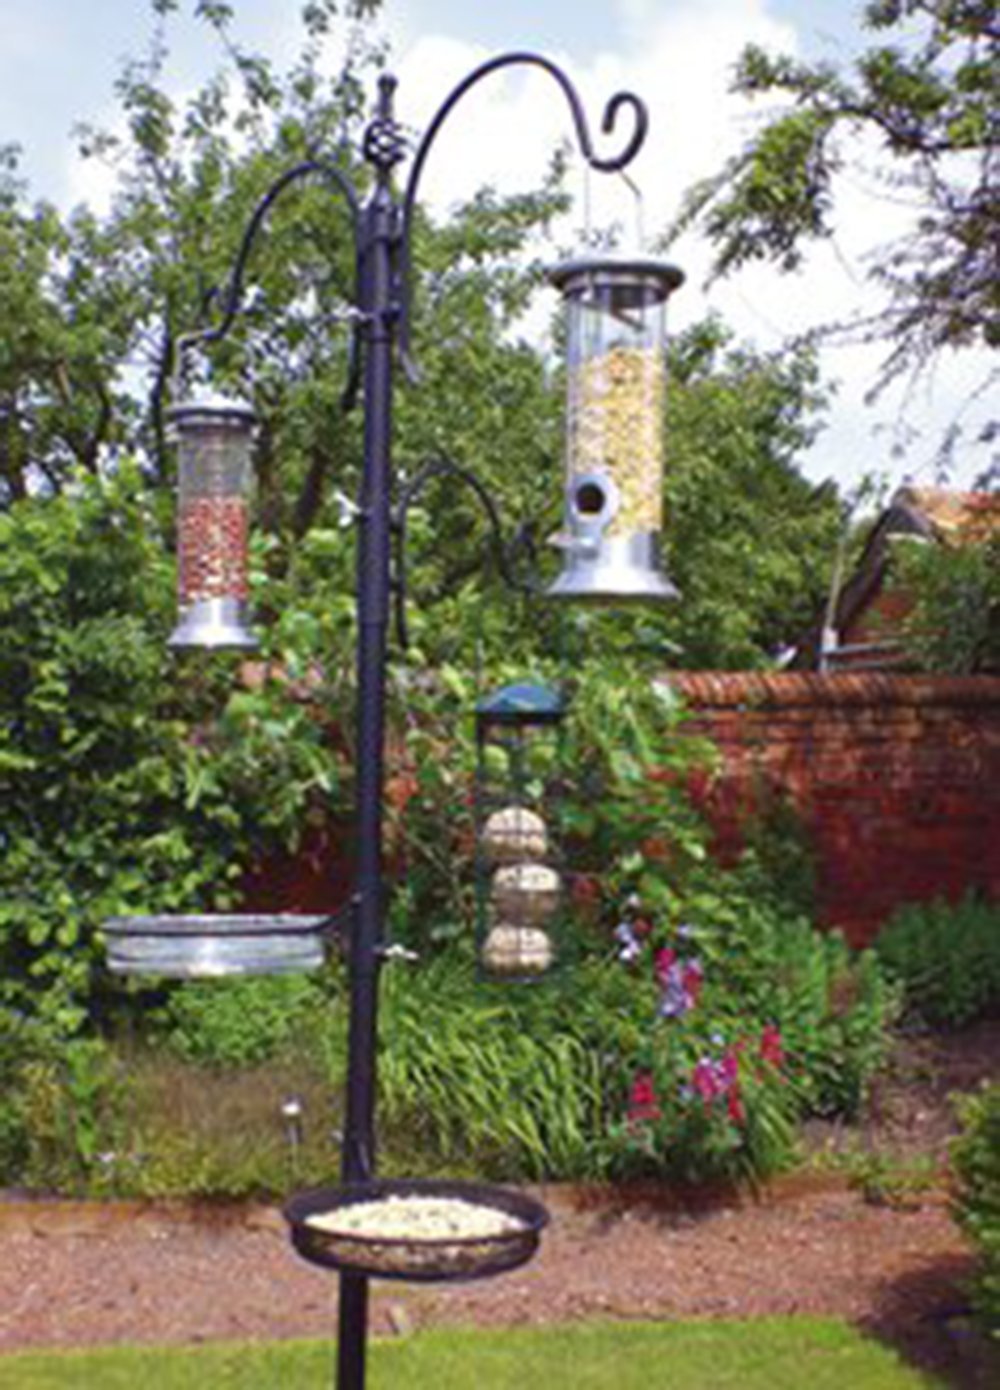 Kingfisher Bird Feeding Station